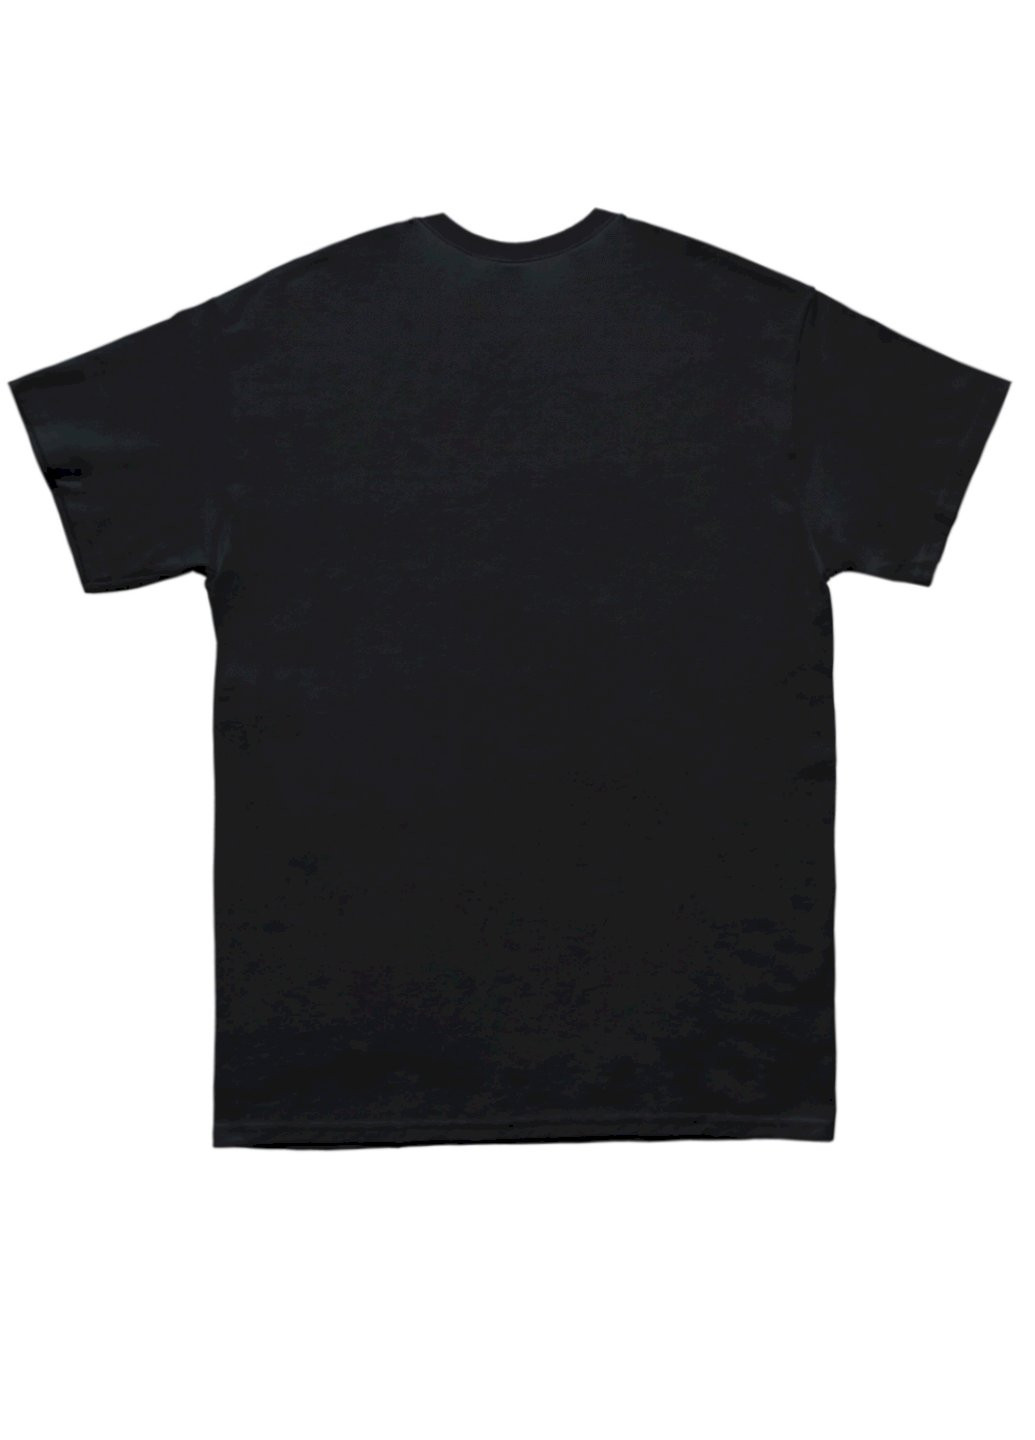 Черная футболка мужская черная "космонавт" Trace of Space